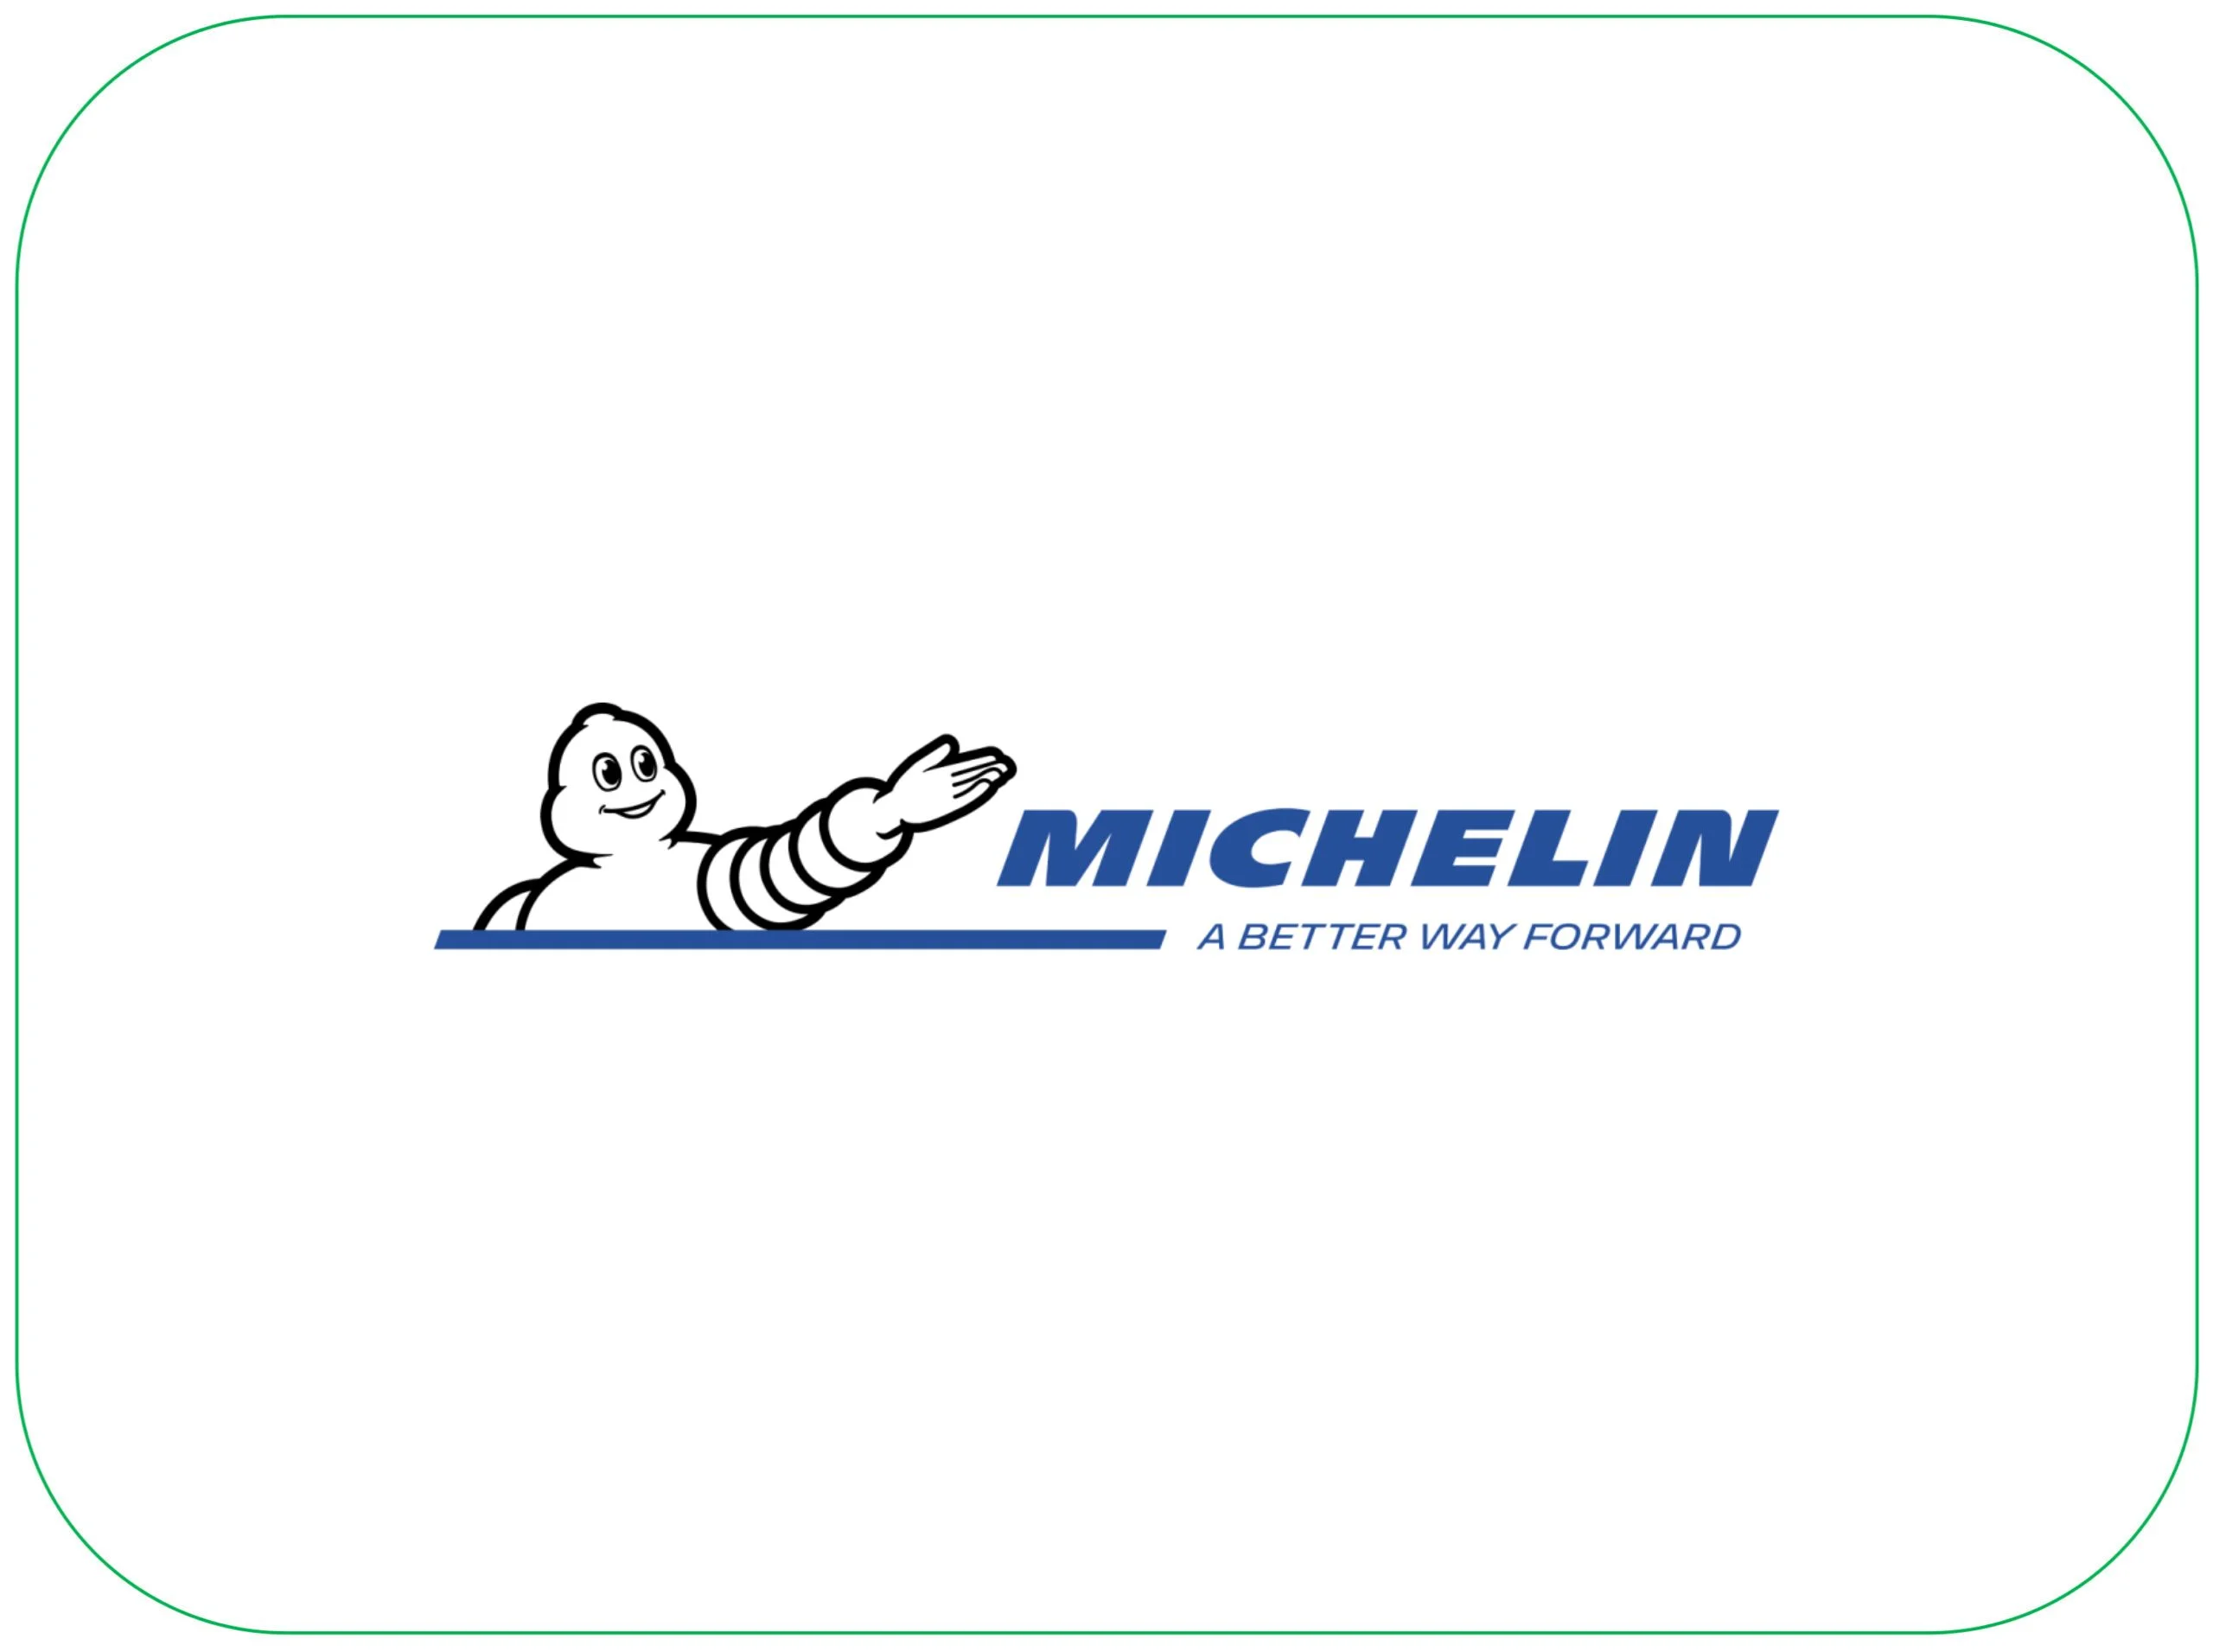 Recognised Workplaces - Michelin Australia Pty Ltd